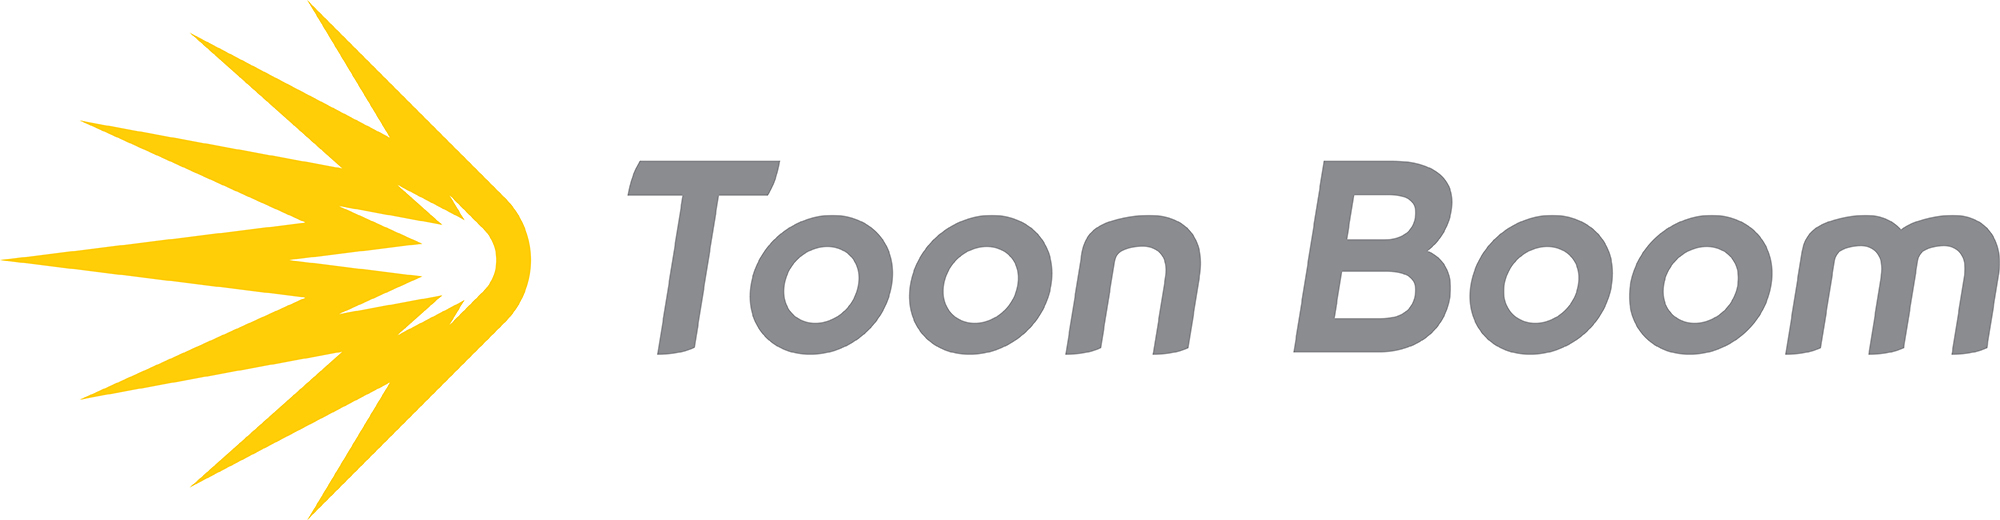 Toon Boom Announces 